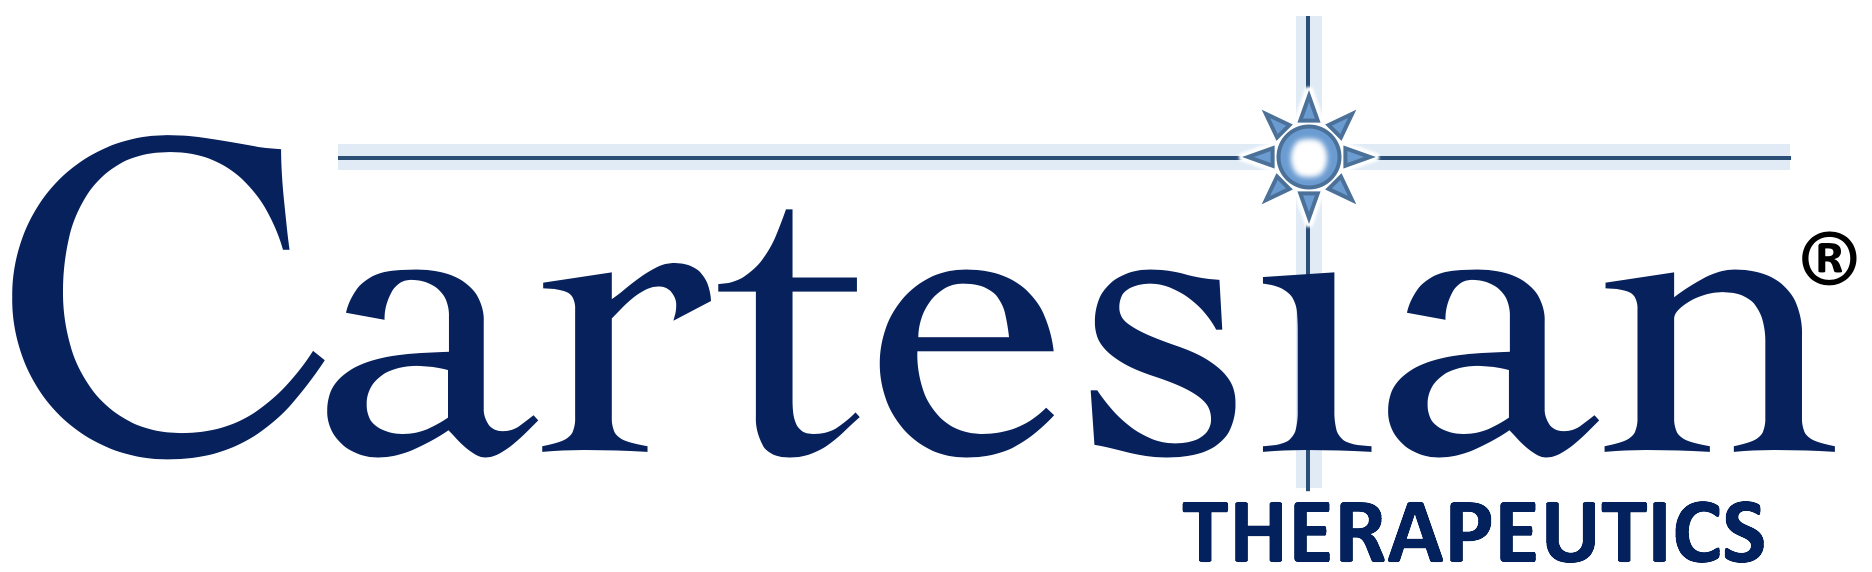 Cartesian Logo (official - new 11.1.19).png